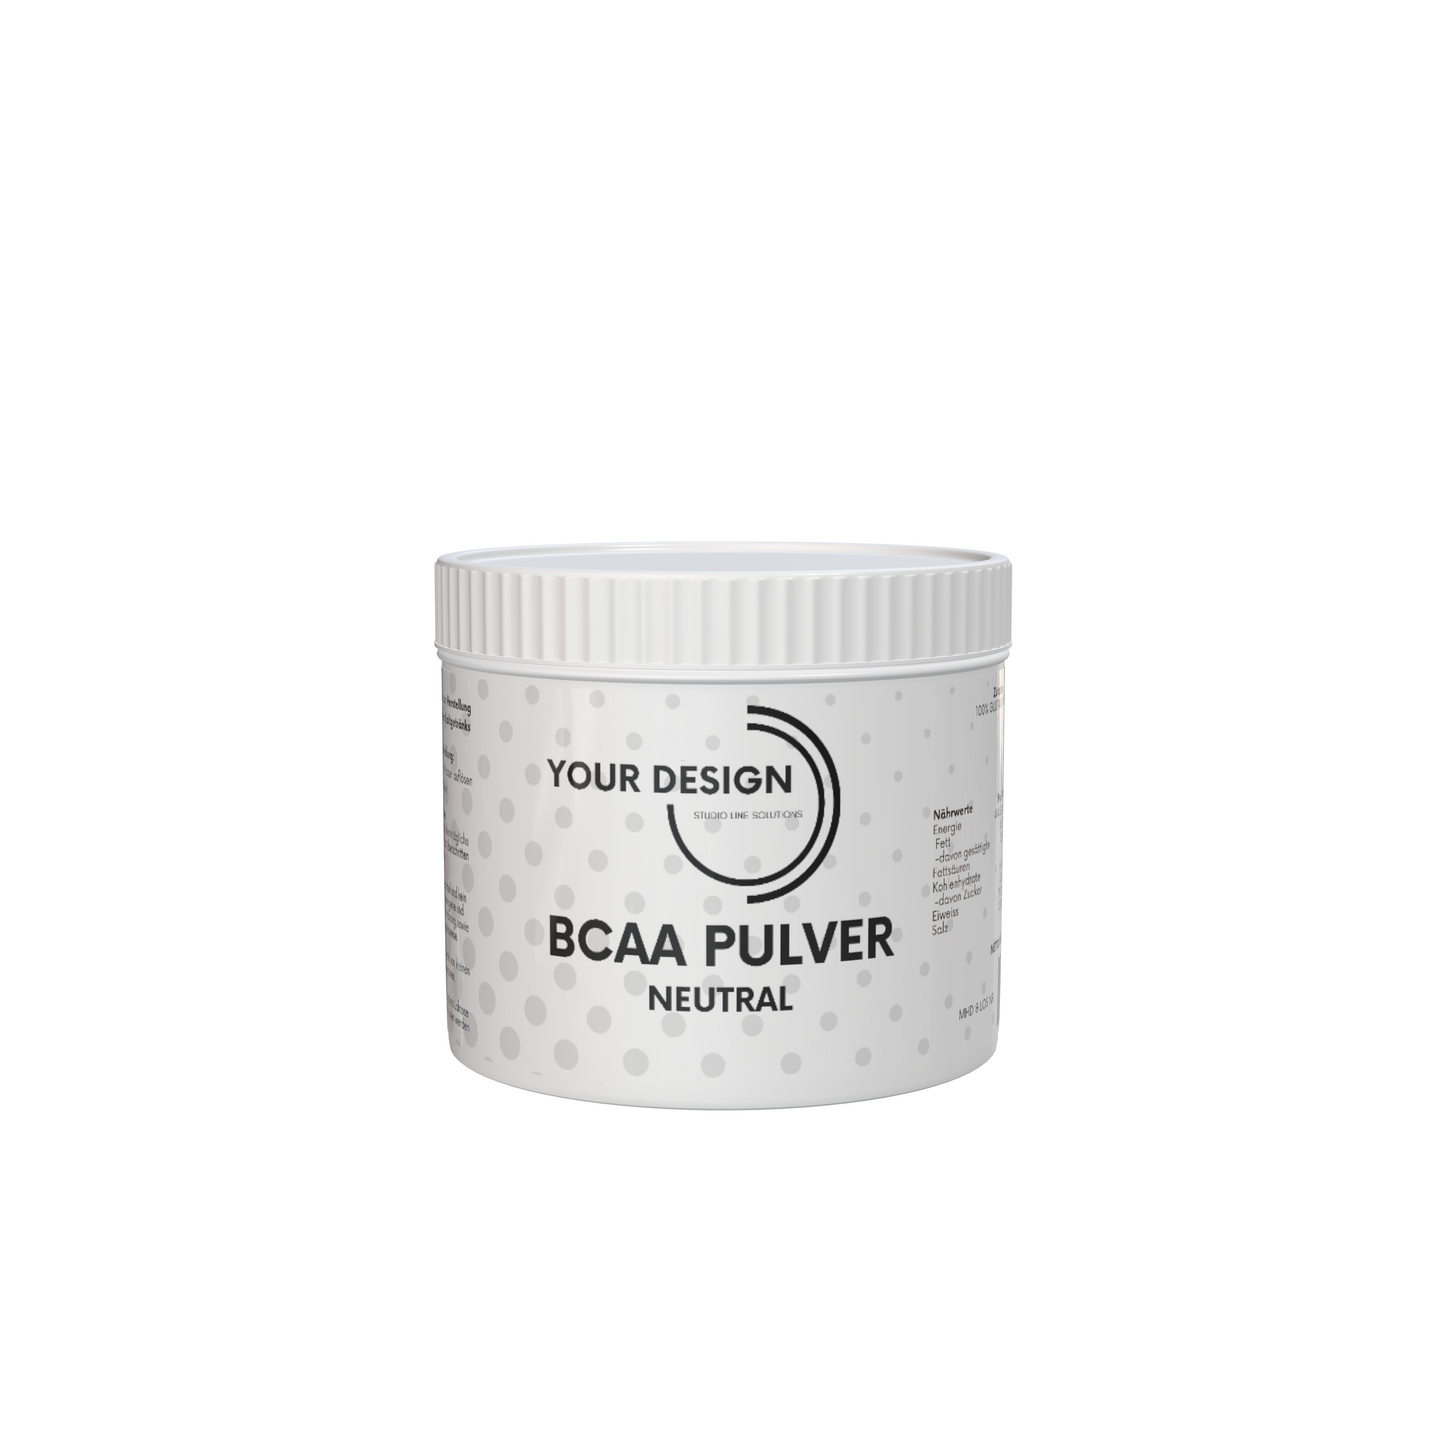 BCAA powder - with leucine, isoleucine and valine - during training